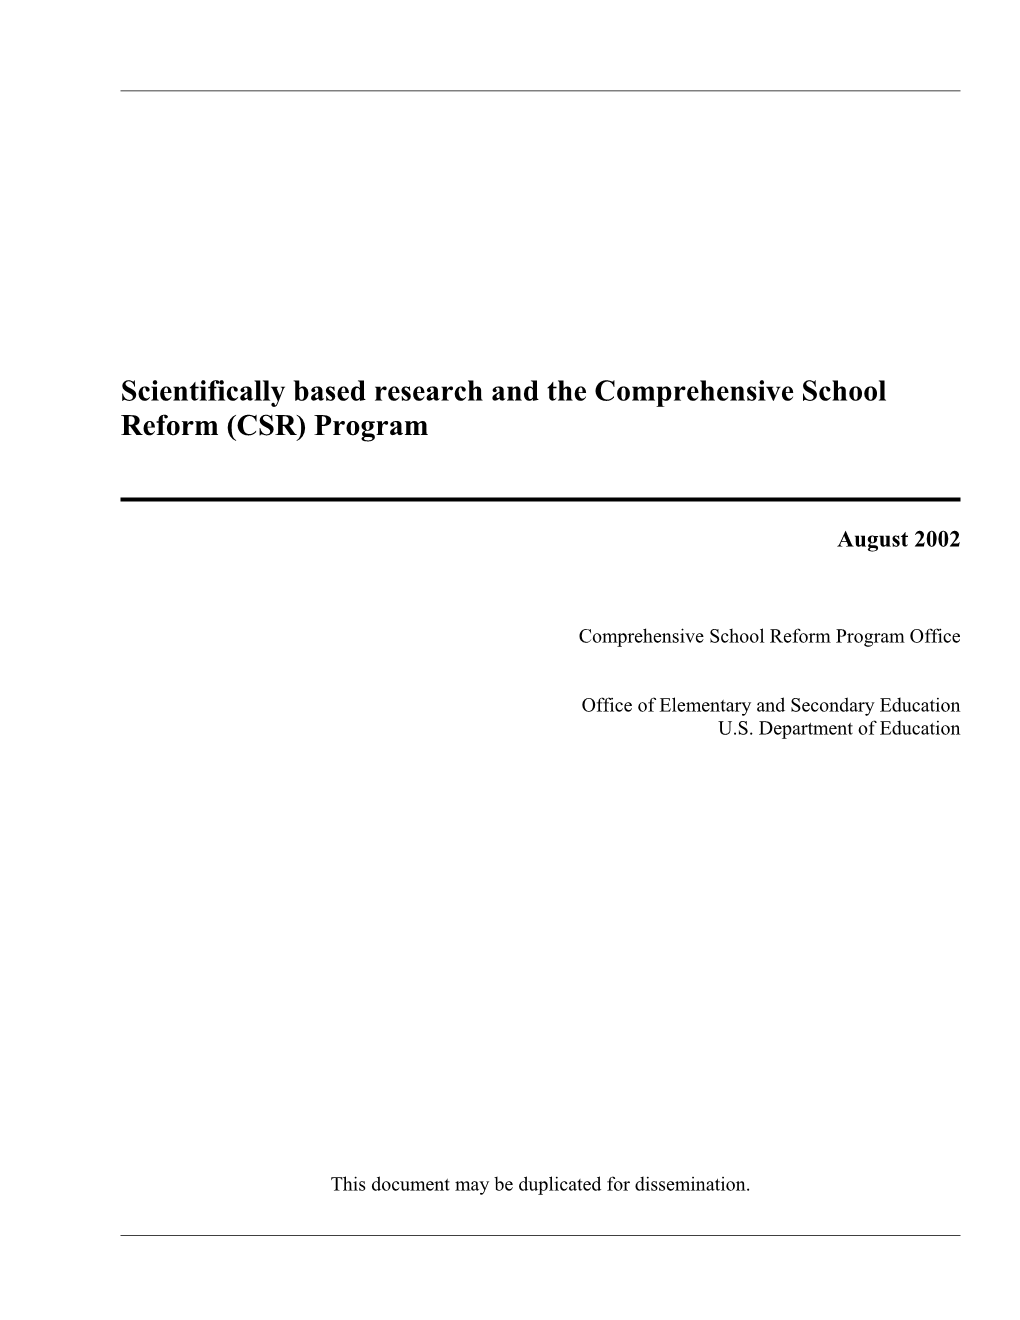 Comprehensive School Reform Guidance Appendix C (MS Word)